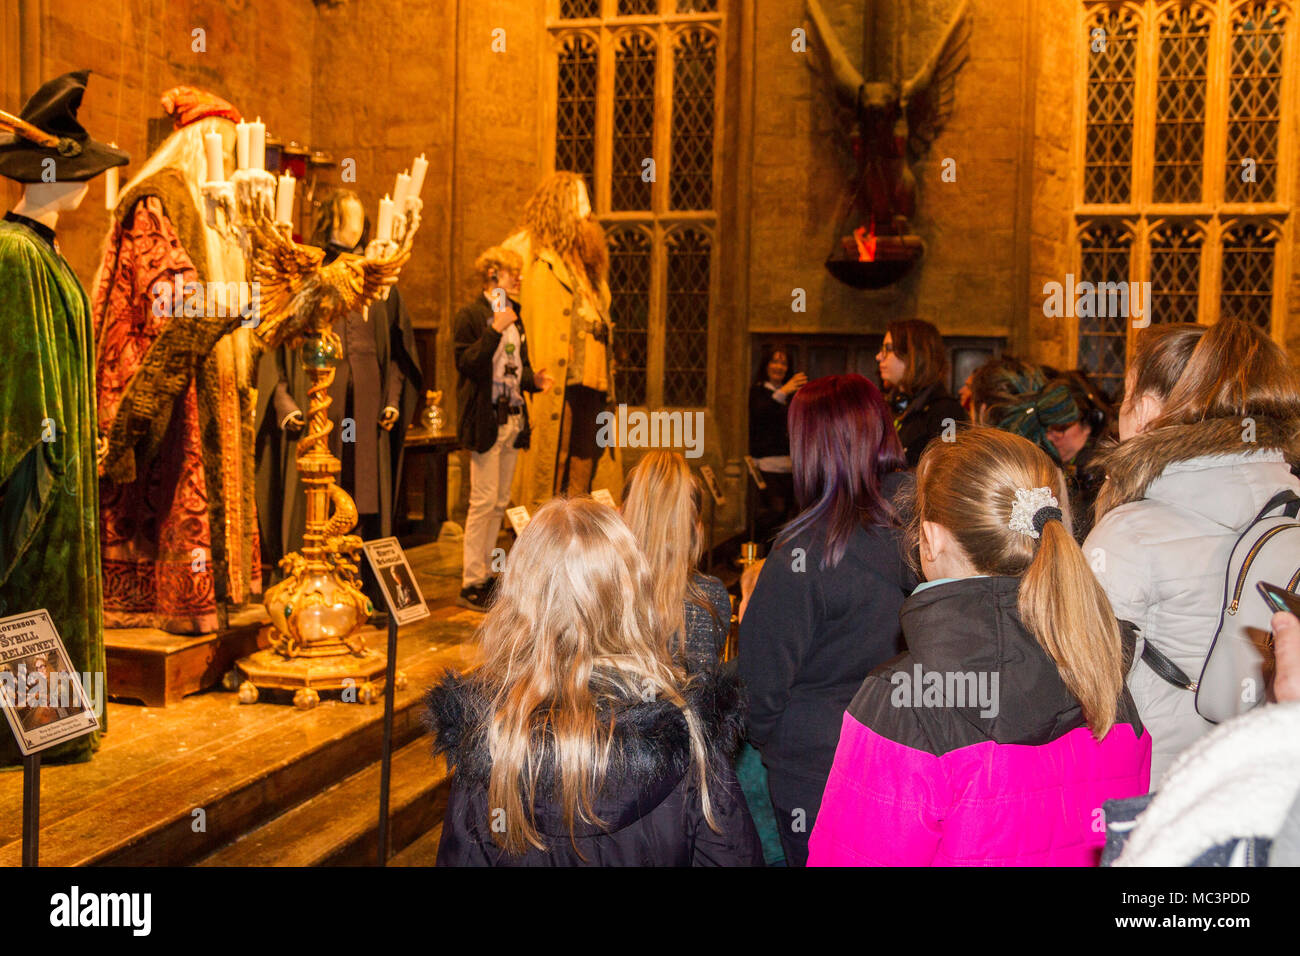 Les studios de Harry Potter, Poudlard, les décisions de Harry Potter Warner Bros Studio Tour, Londres, grand hall costumes Leavesden mcgonigle dumbledore rogue Banque D'Images